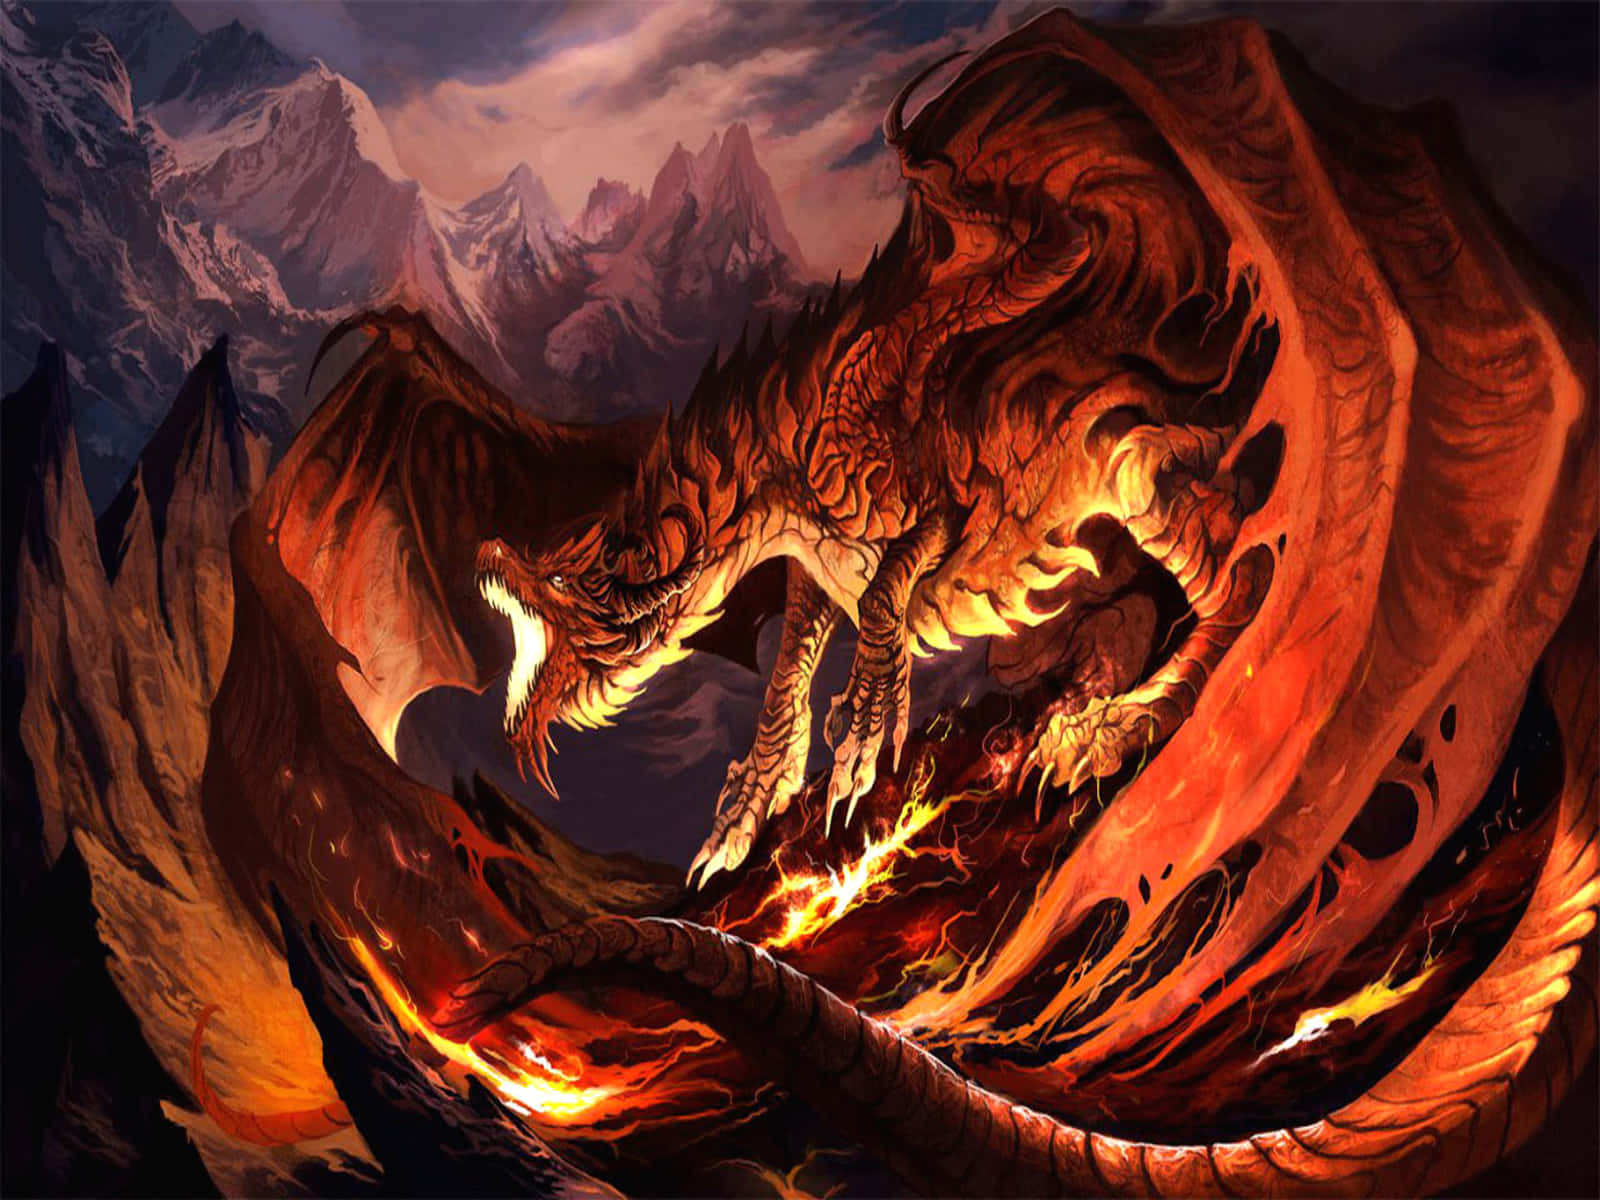 Epic dragon wallpaper dump - post - Imgur